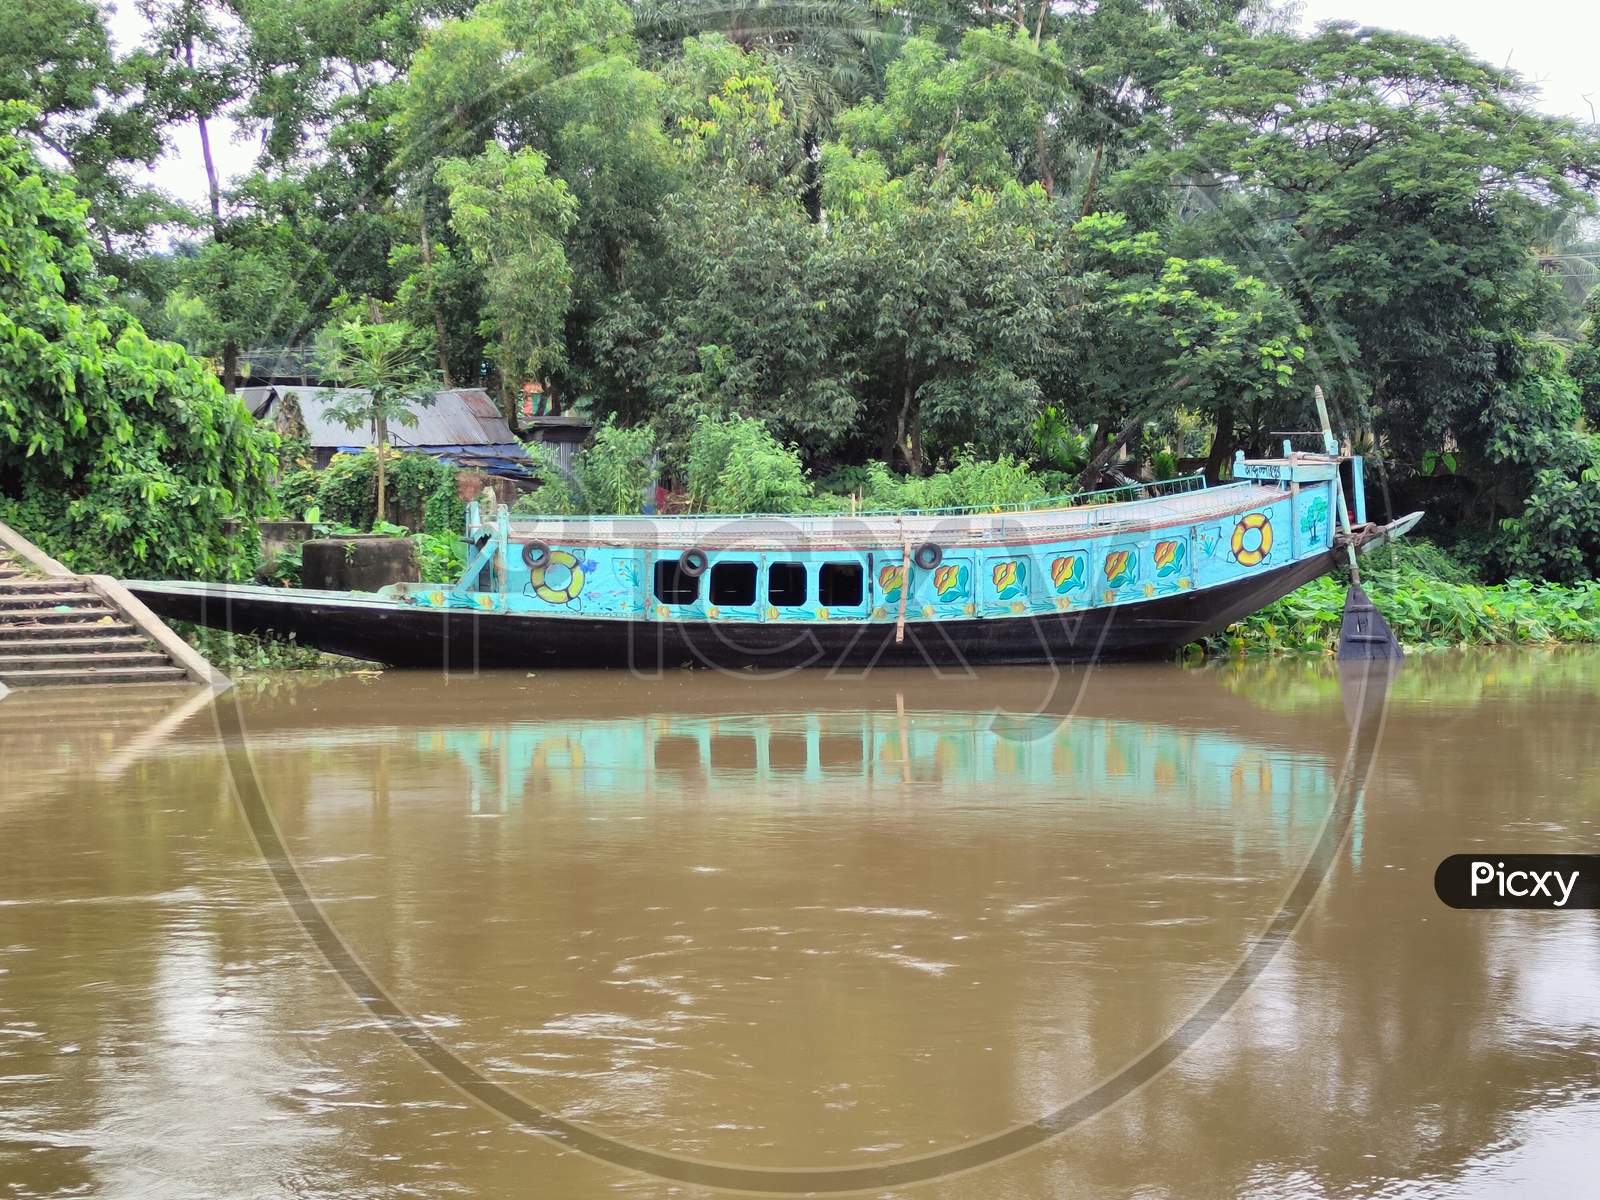 A passenger boat in Bangladesh